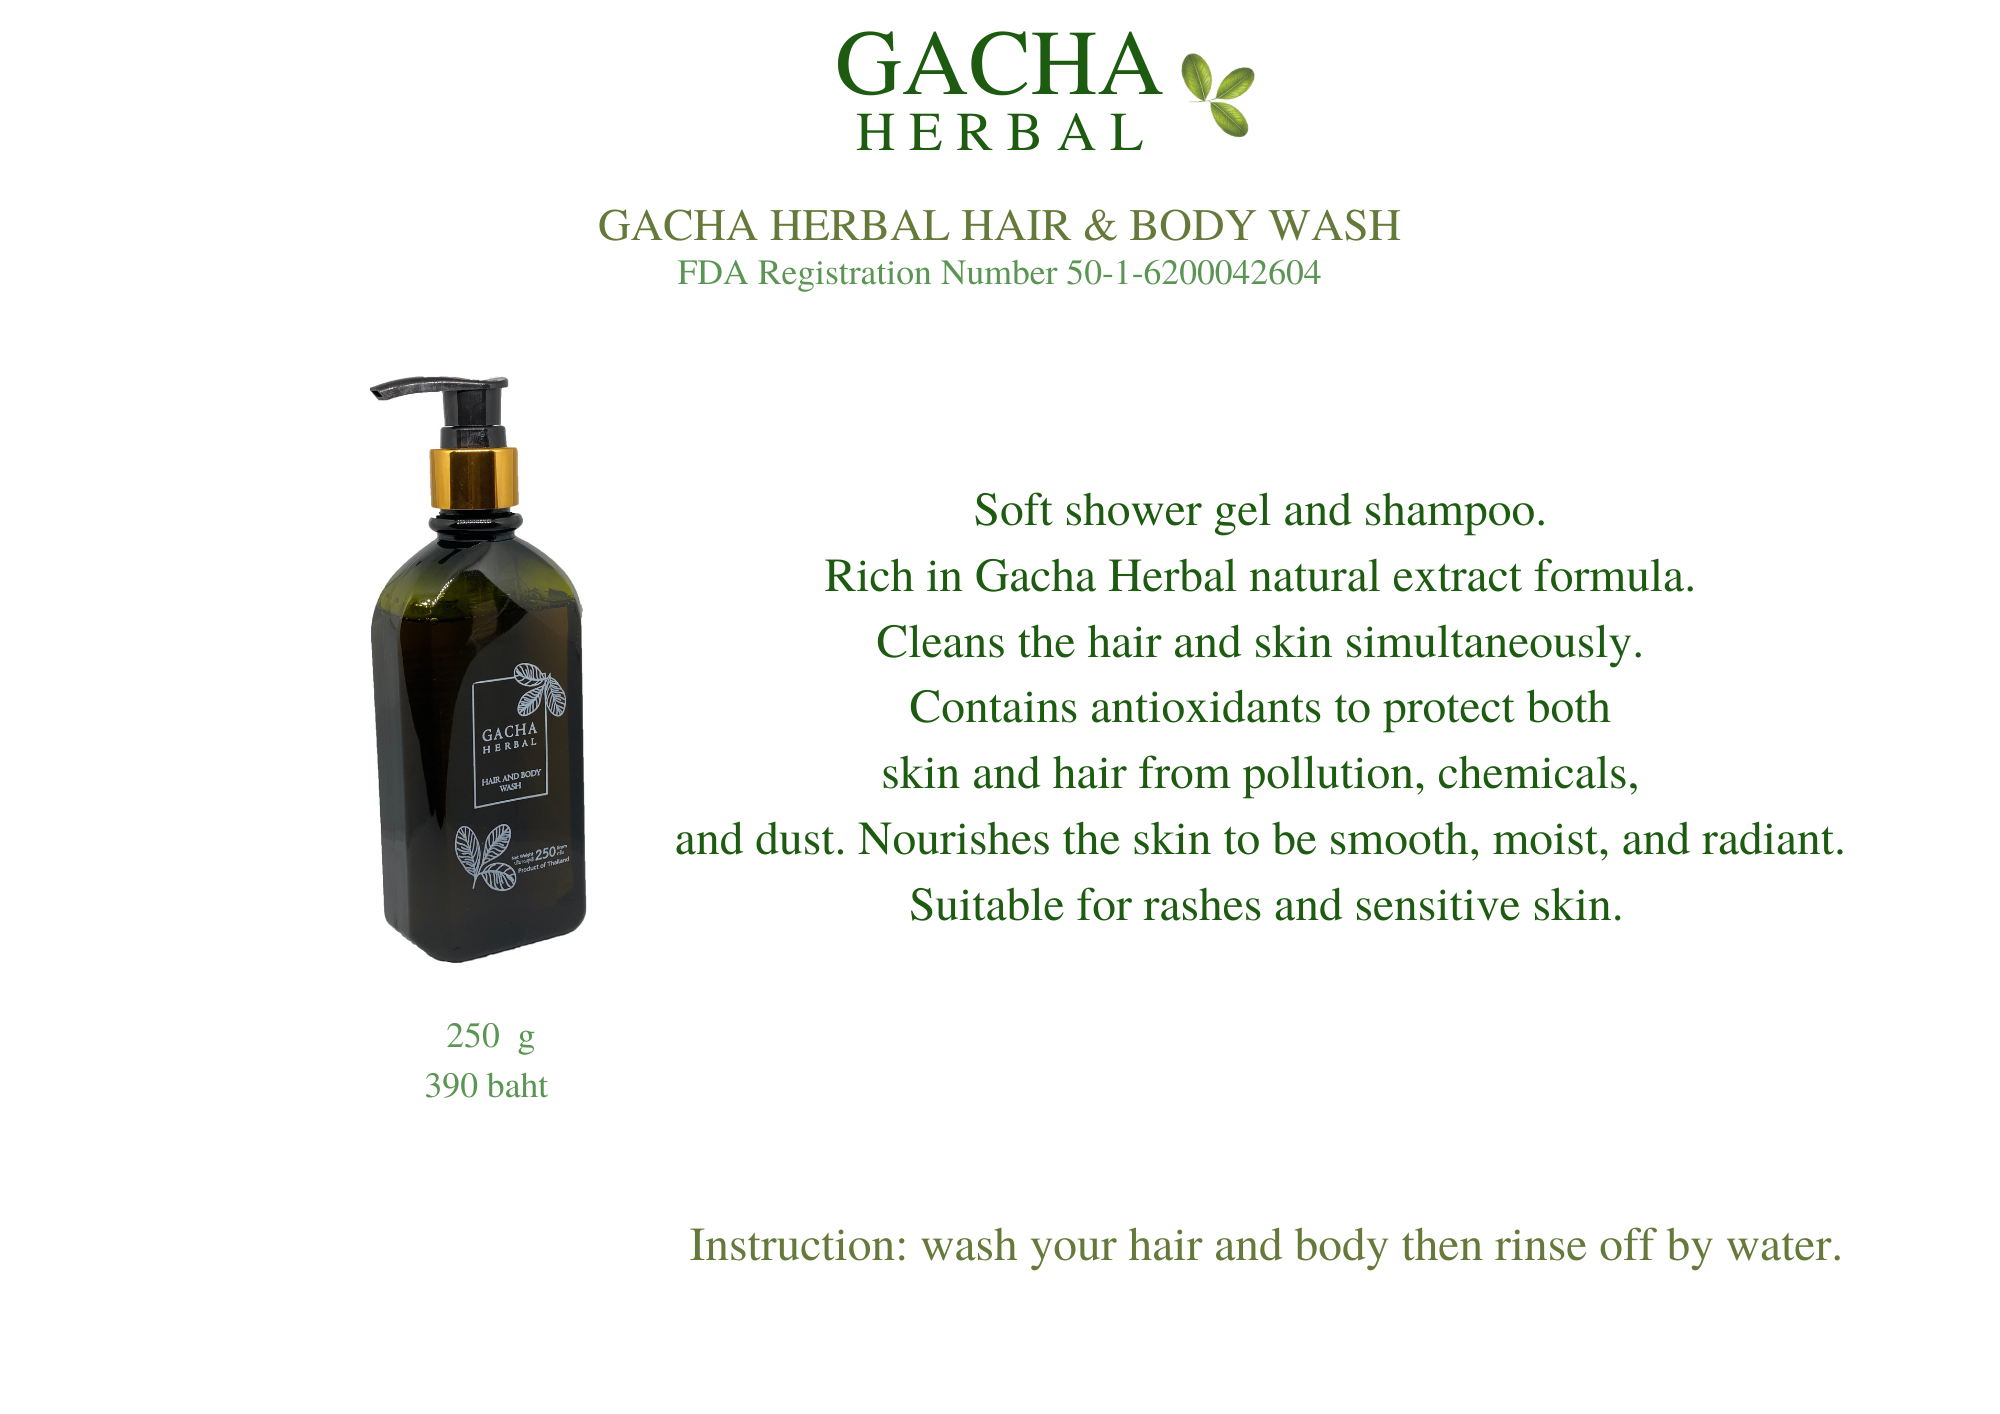 Gacha Herbal Hair and Body Wash